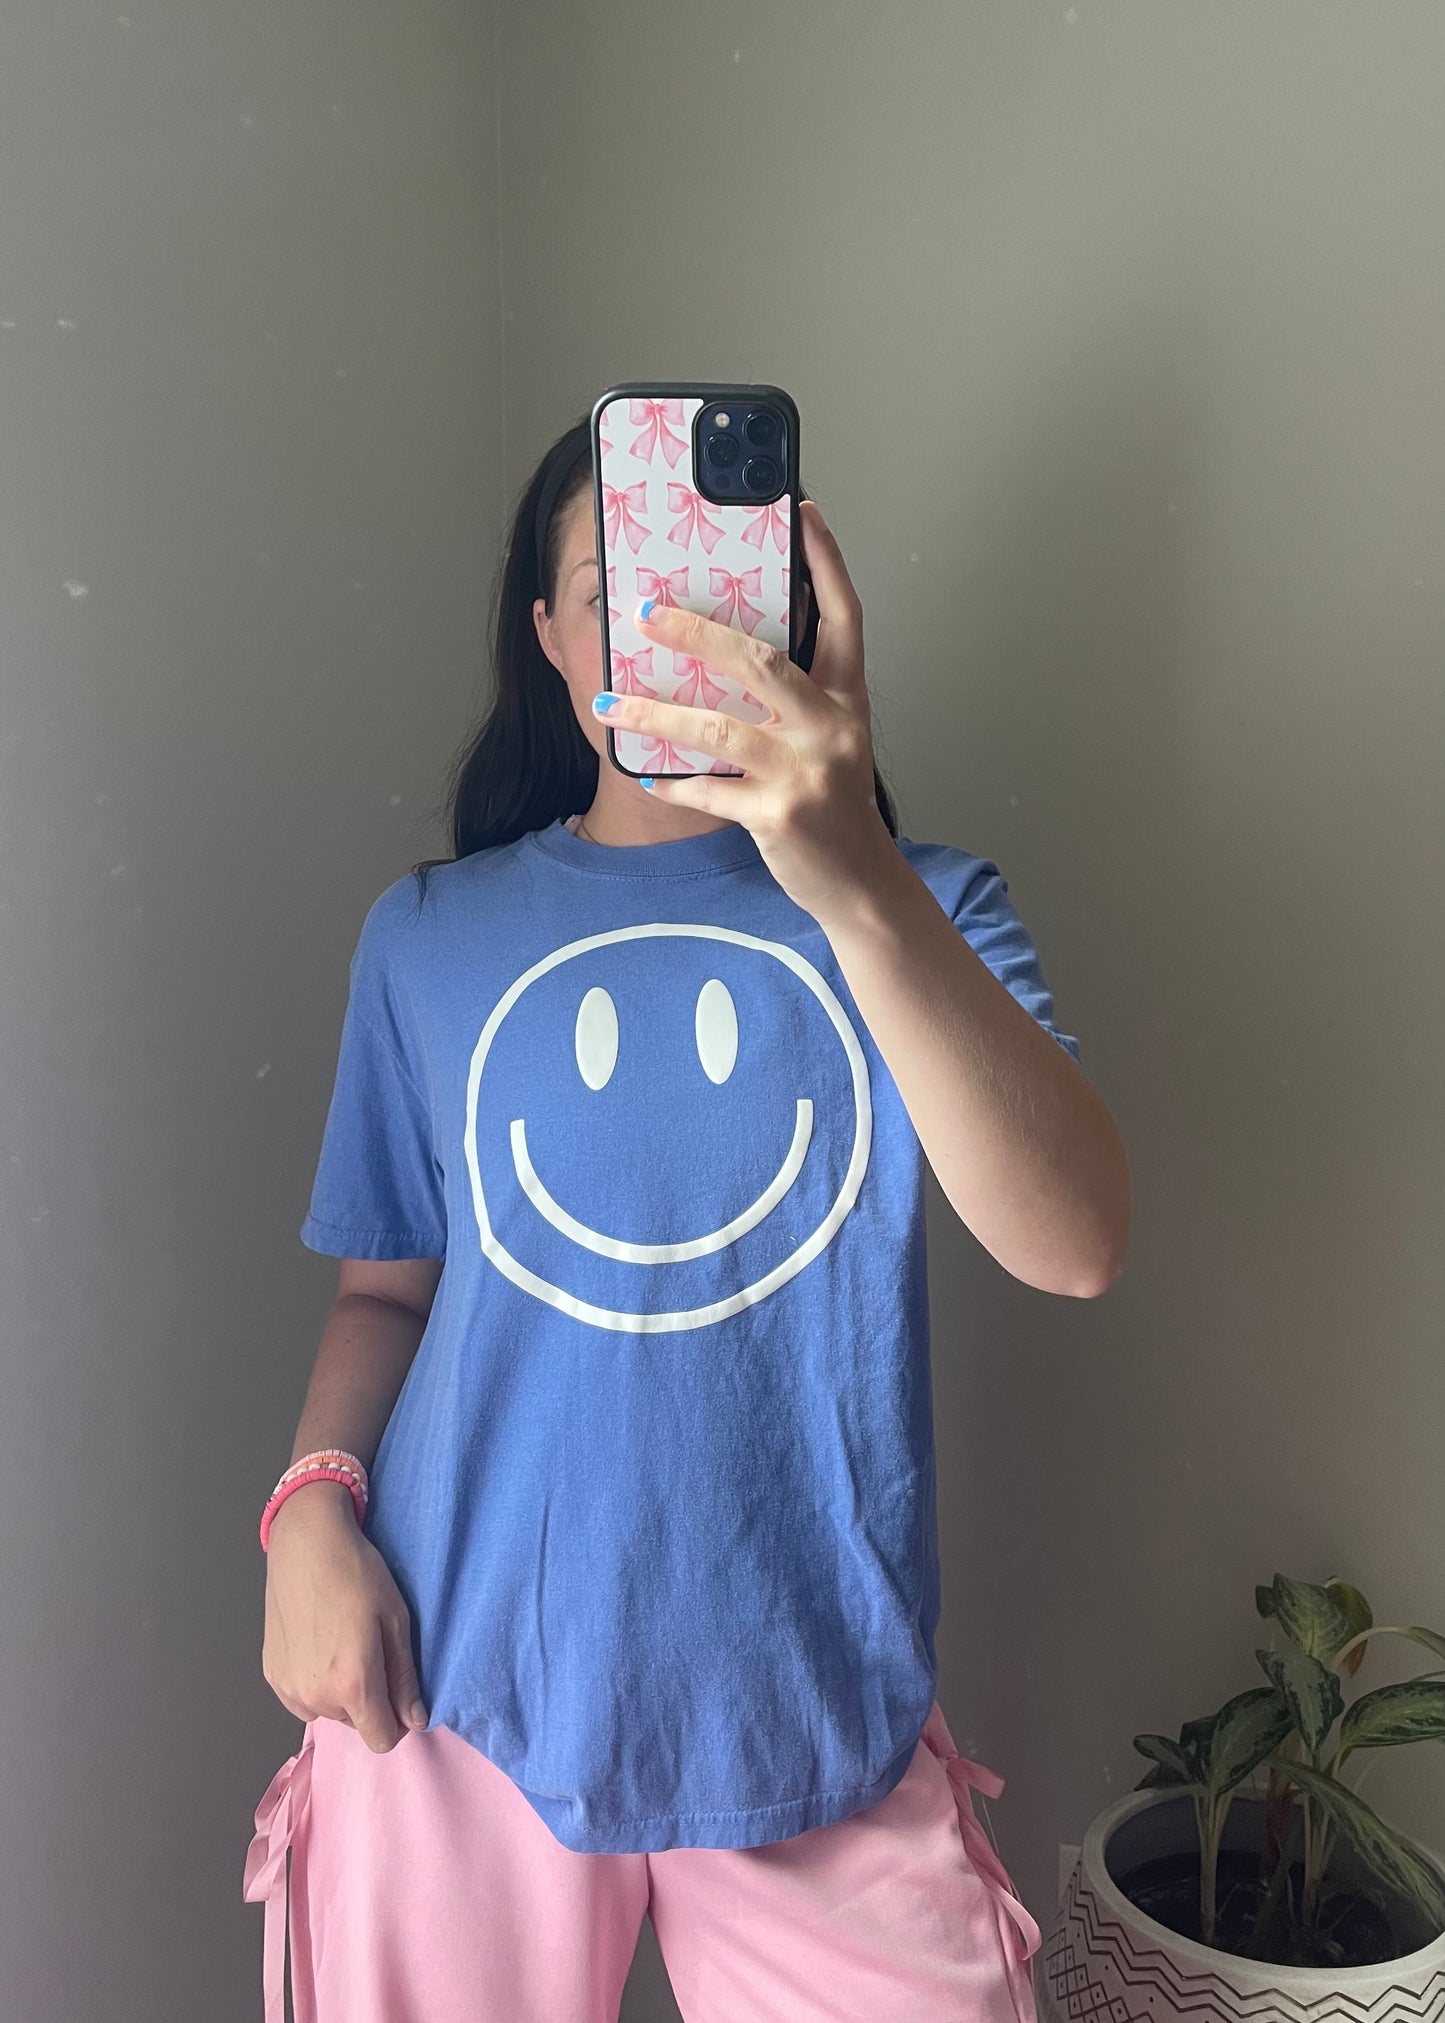 blue+white smiley t-shirt